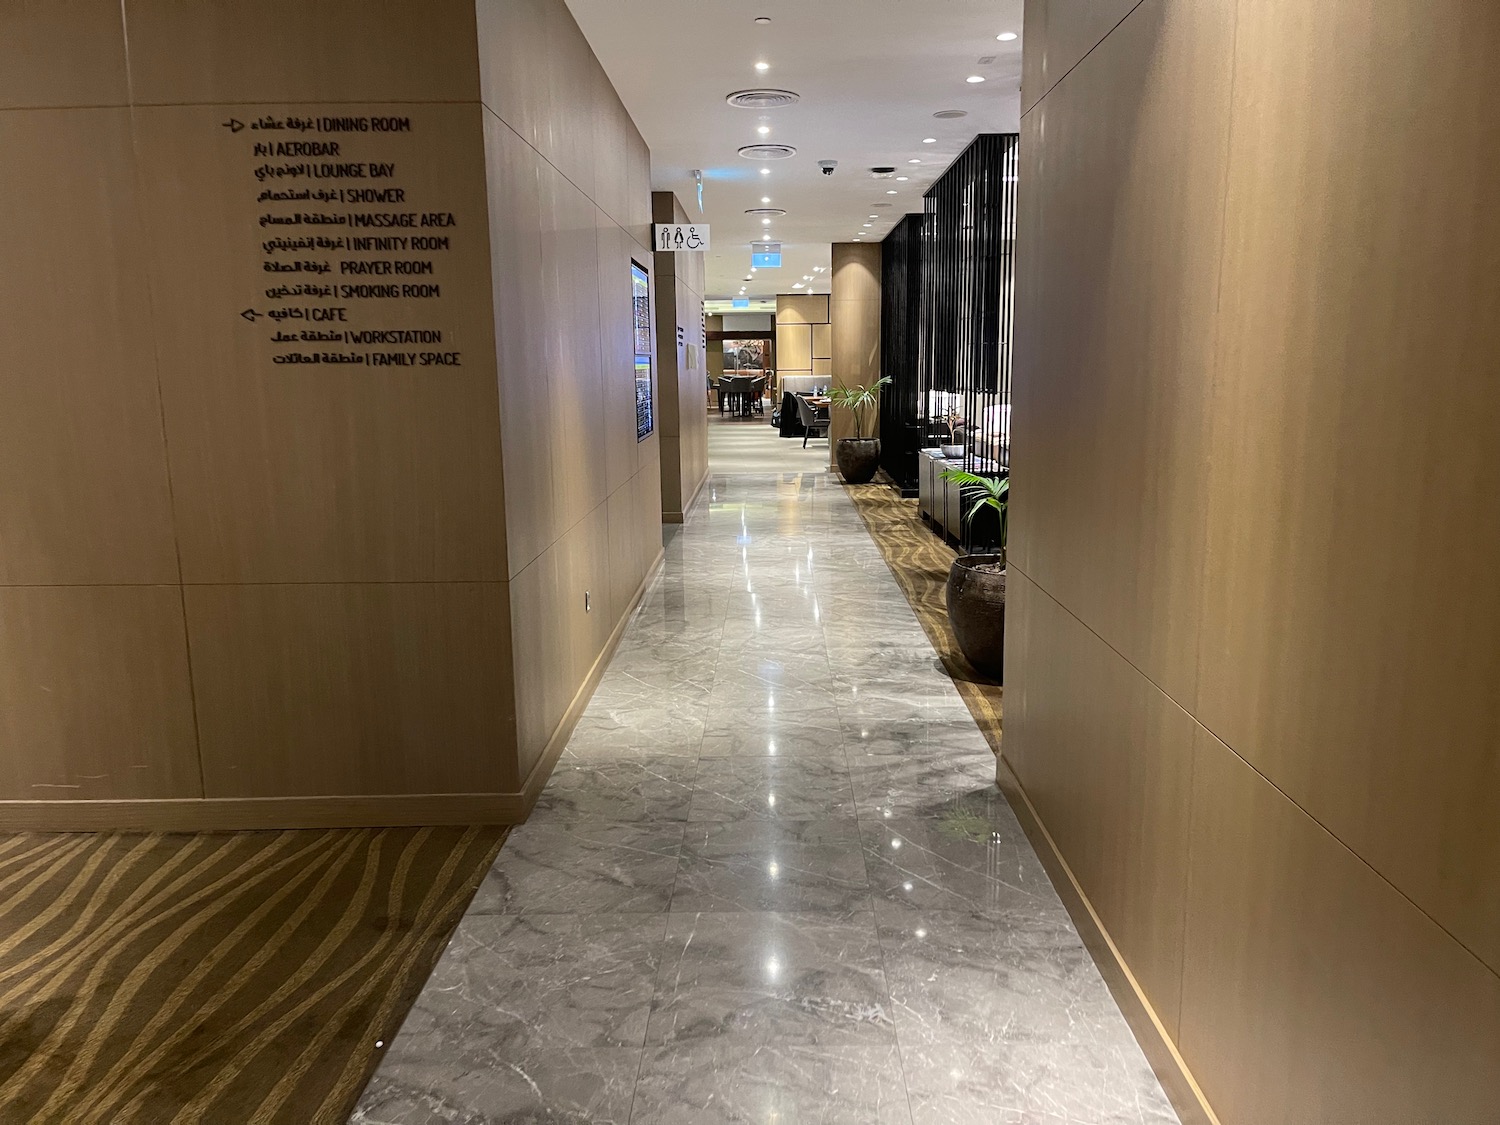 a hallway with a marble floor and a tile floor